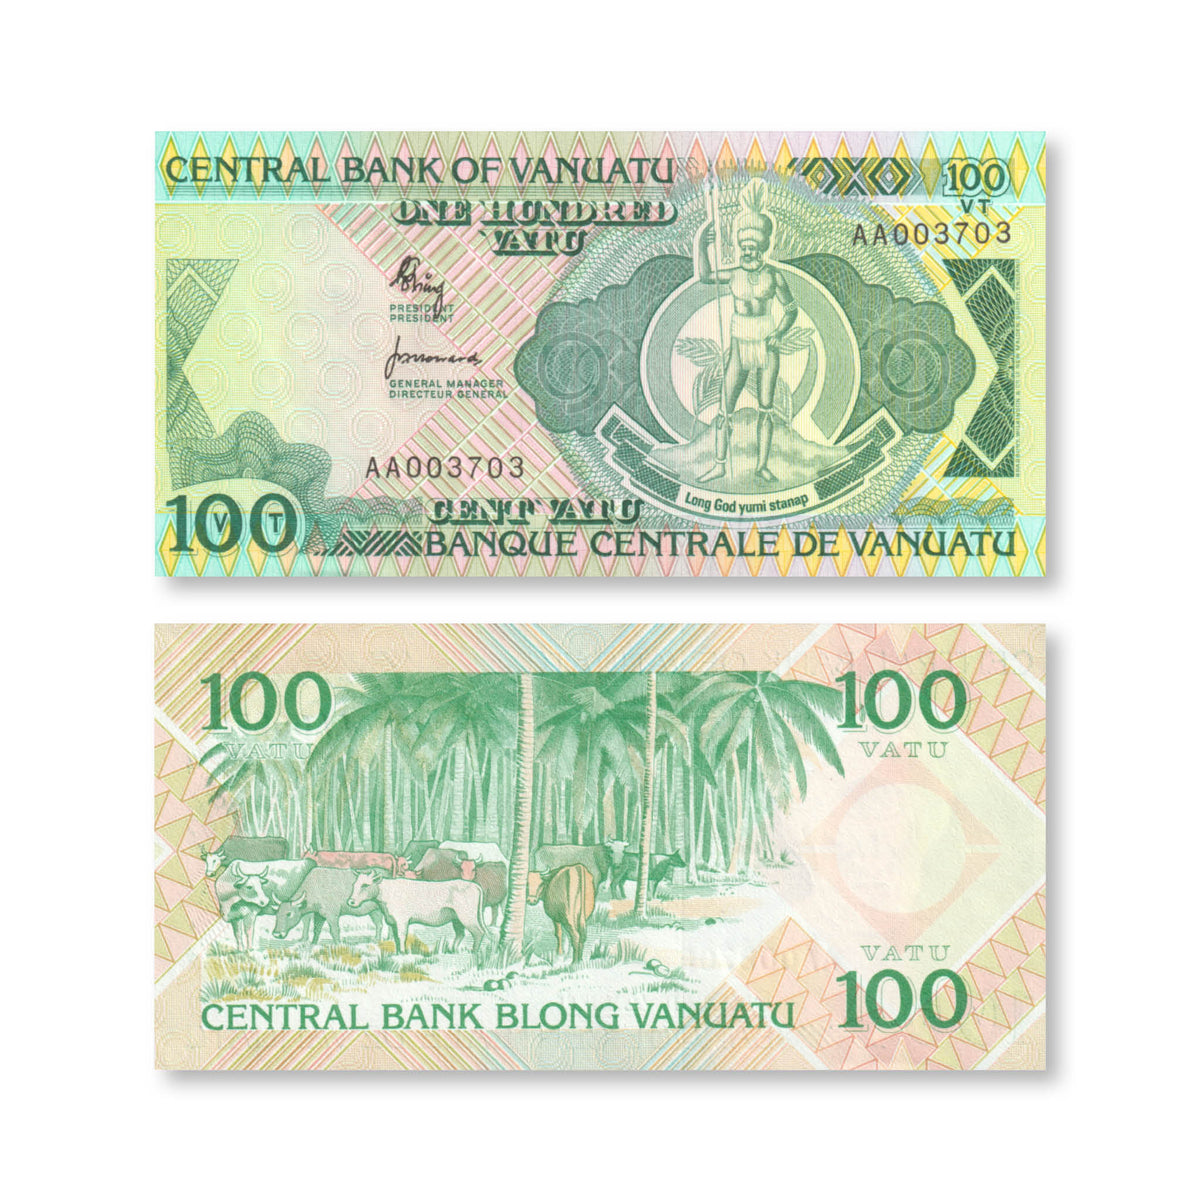 Vanuatu 100 Vatu, 1982, B101a, P1a, UNC - Robert's World Money - World Banknotes